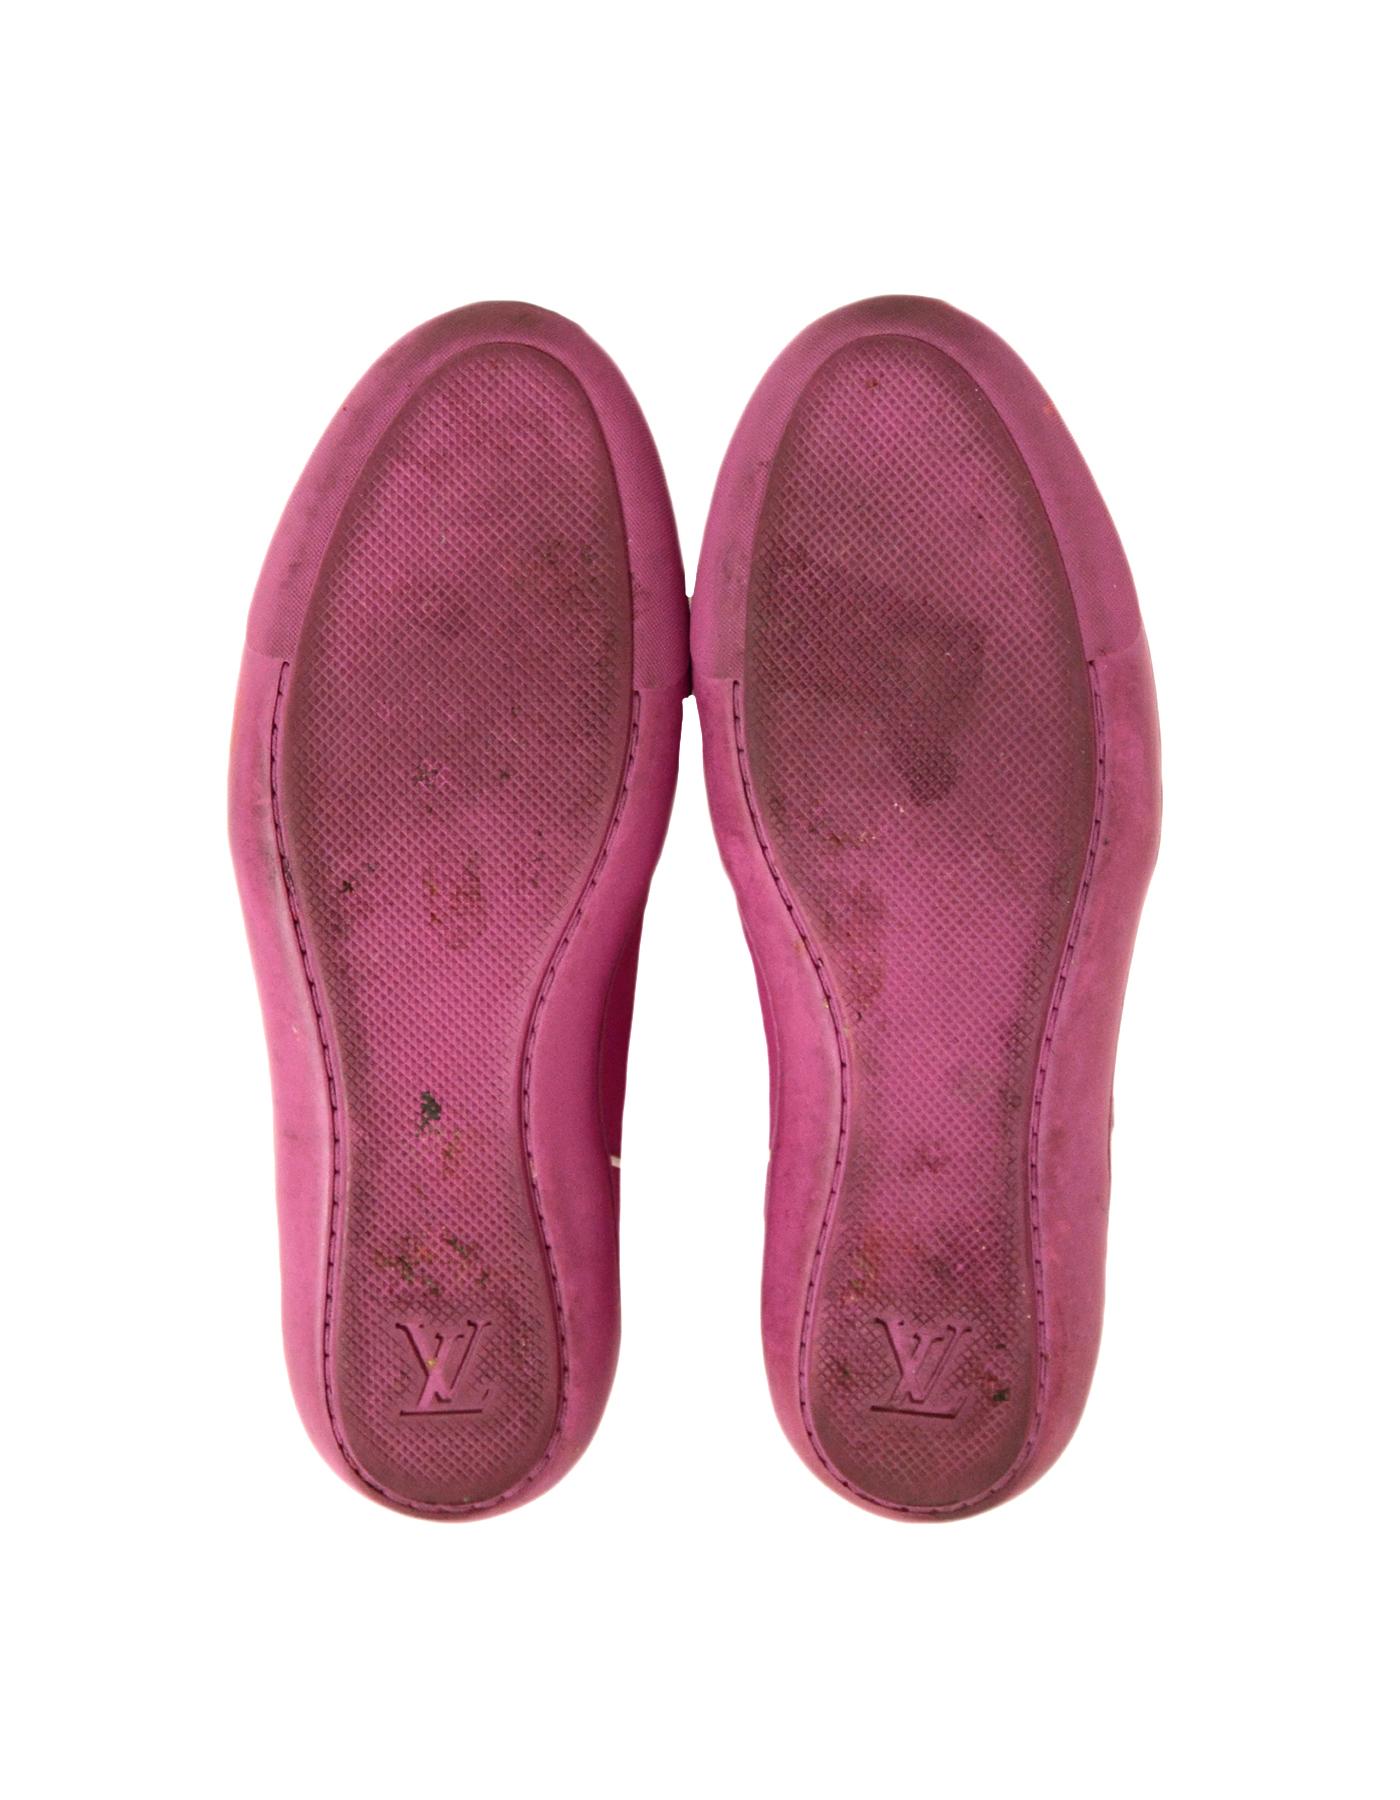 Women's Louis Vuitton Pink/White Leather Logo Sneakers sz 36.5